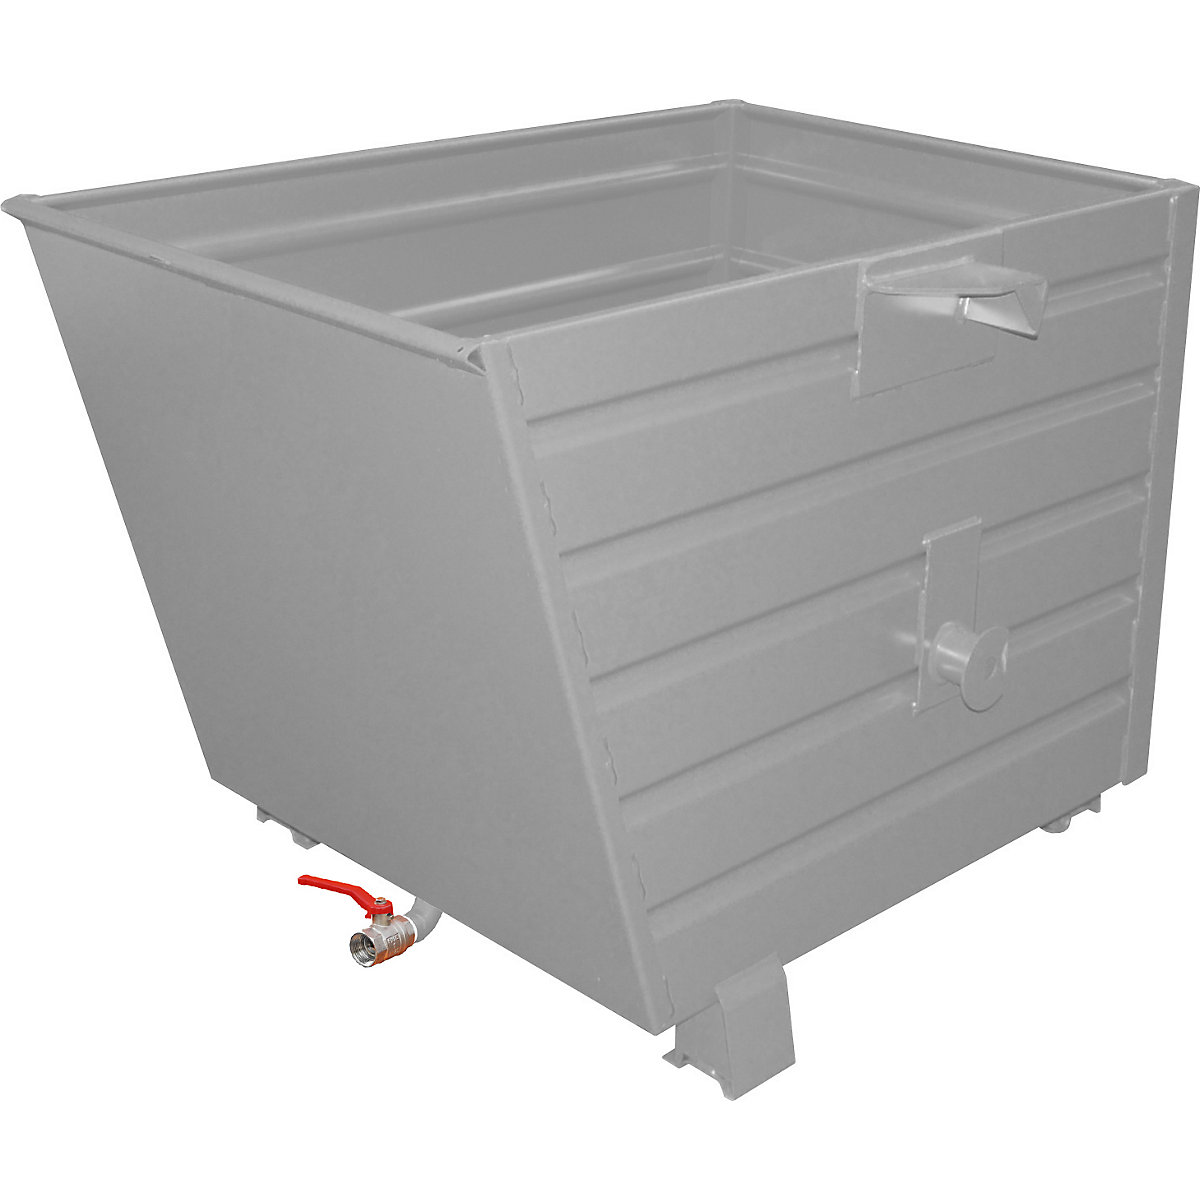 EUROKRAFTpro – Container basculant și stivuibil pentru șpan BSS, volum 0,7 m³, gri șobolan